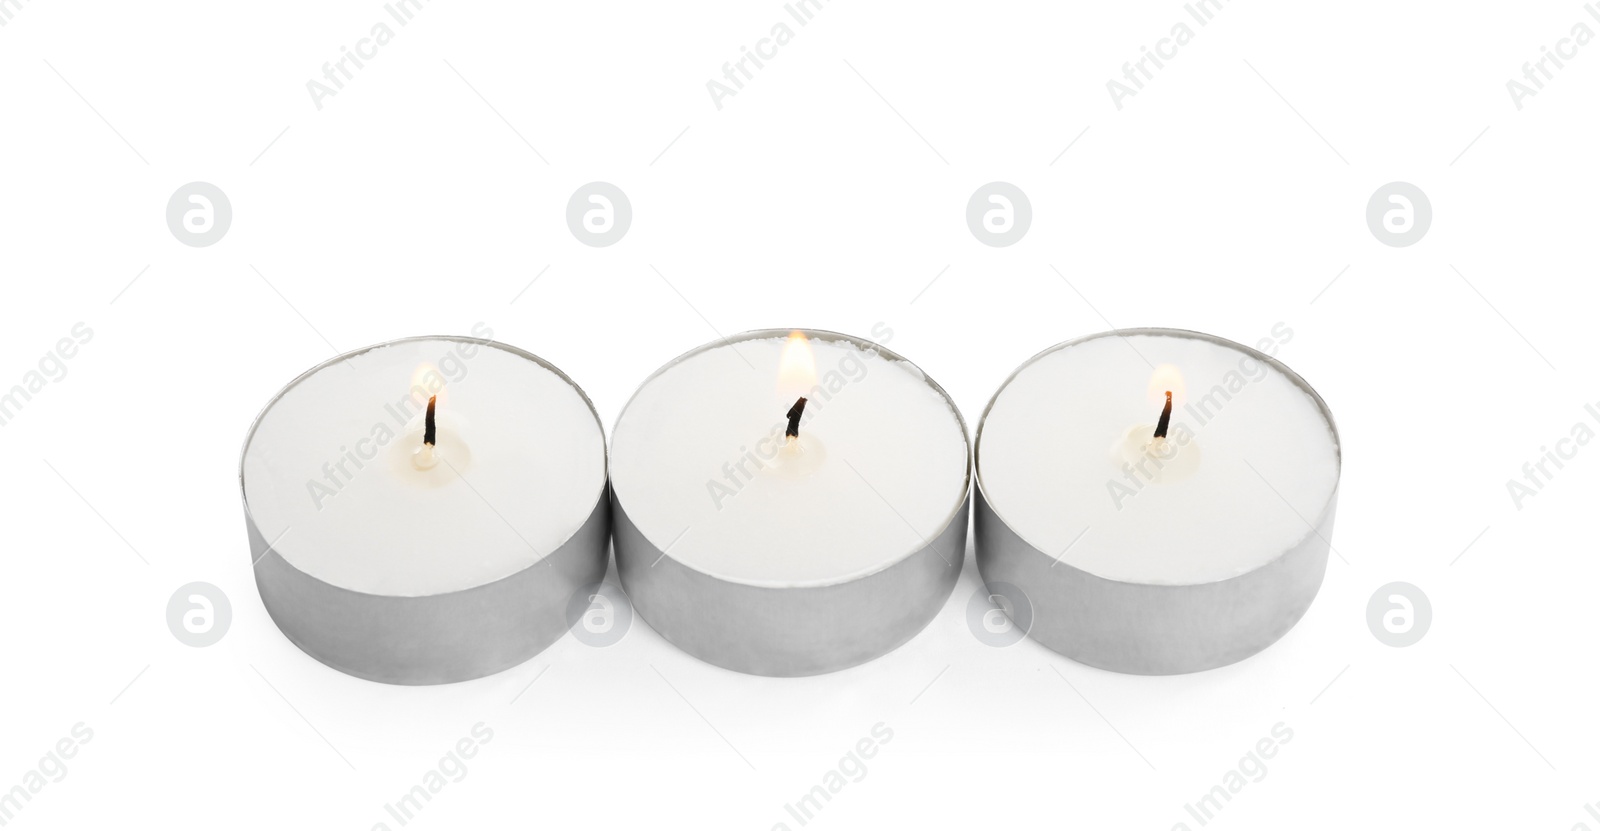 Photo of Wax candles burning on white background. Interior elements